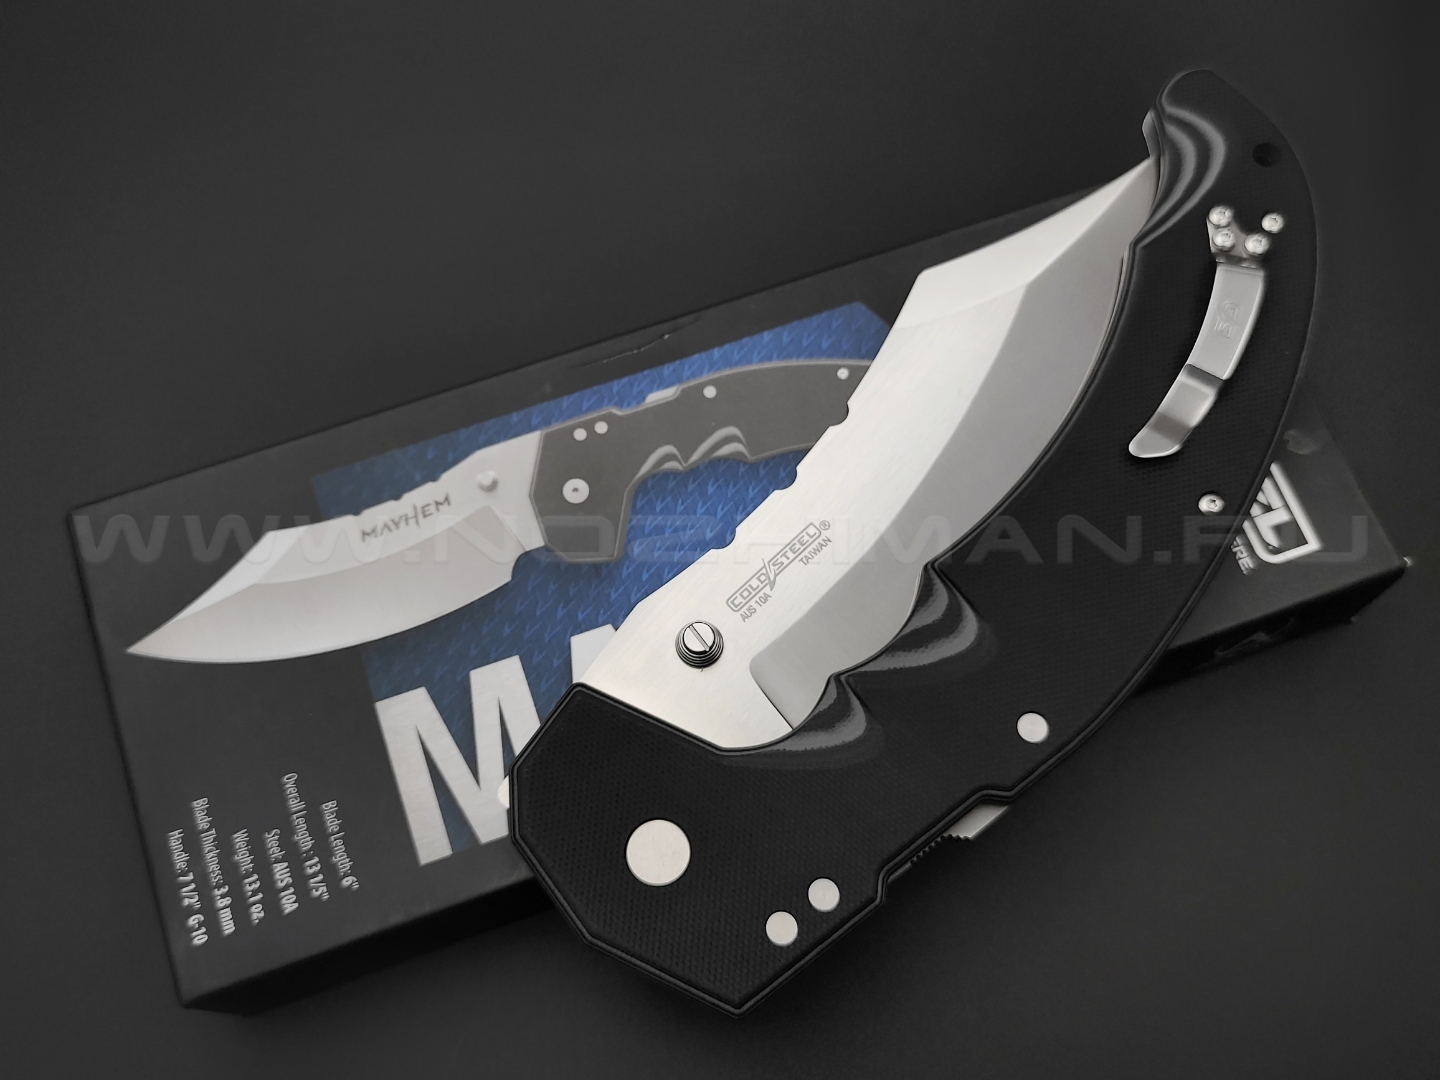 Нож Cold Steel Mayhem FL-60DPLM сталь AUS10A, рукоять G10